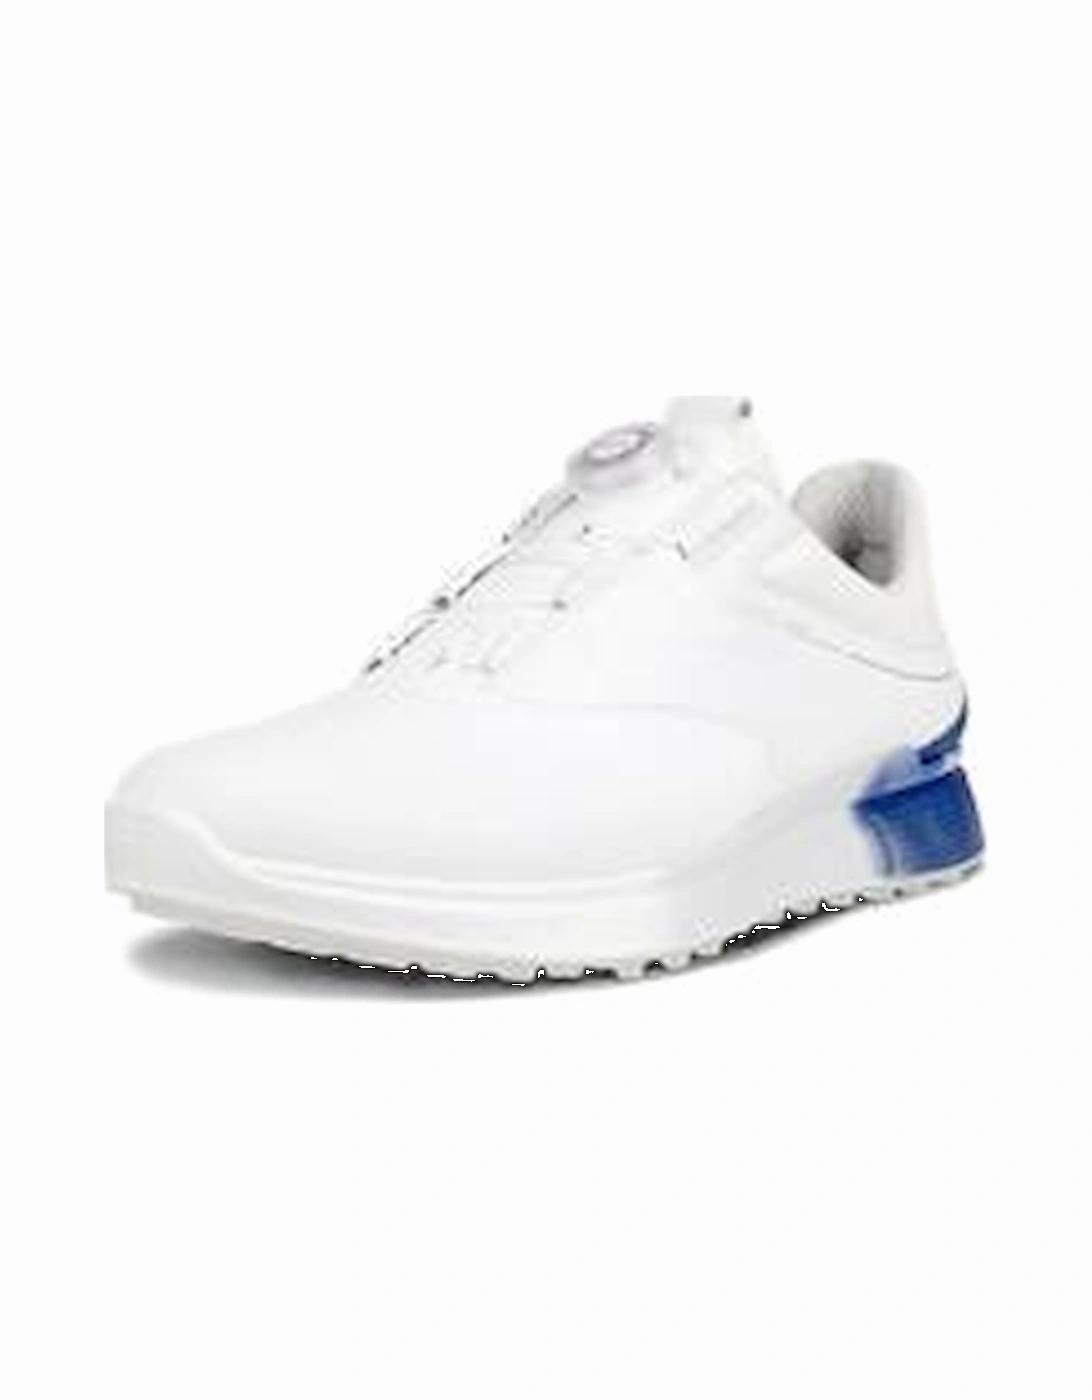 Golf S-three Boa 102954-60616  in white leather